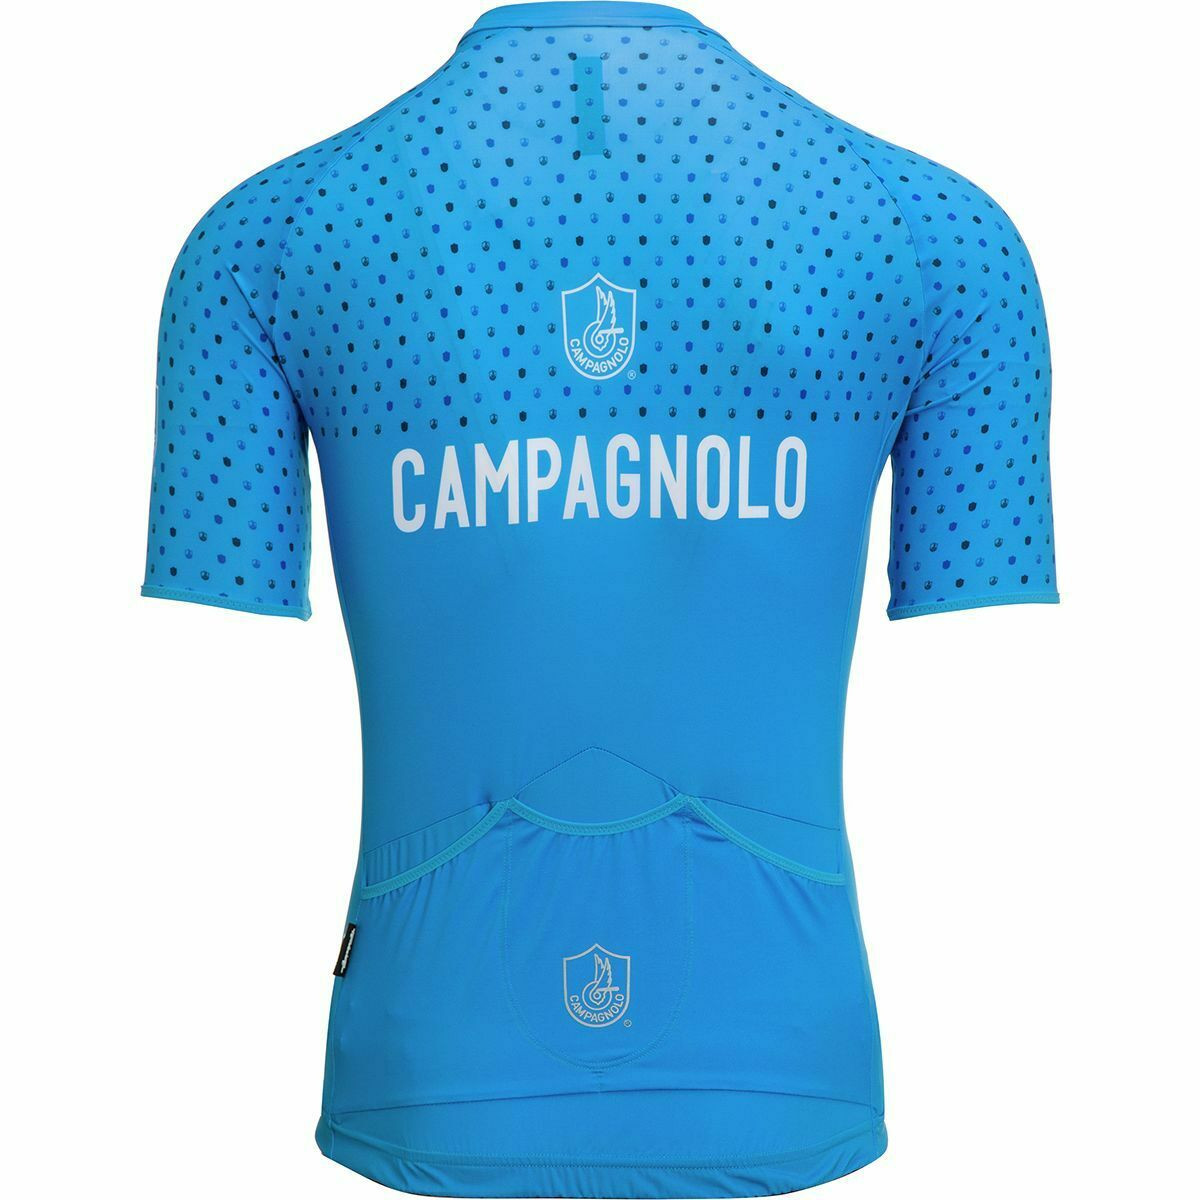 Campagnolo Quarzo Dots Light Blue Jersey Rider